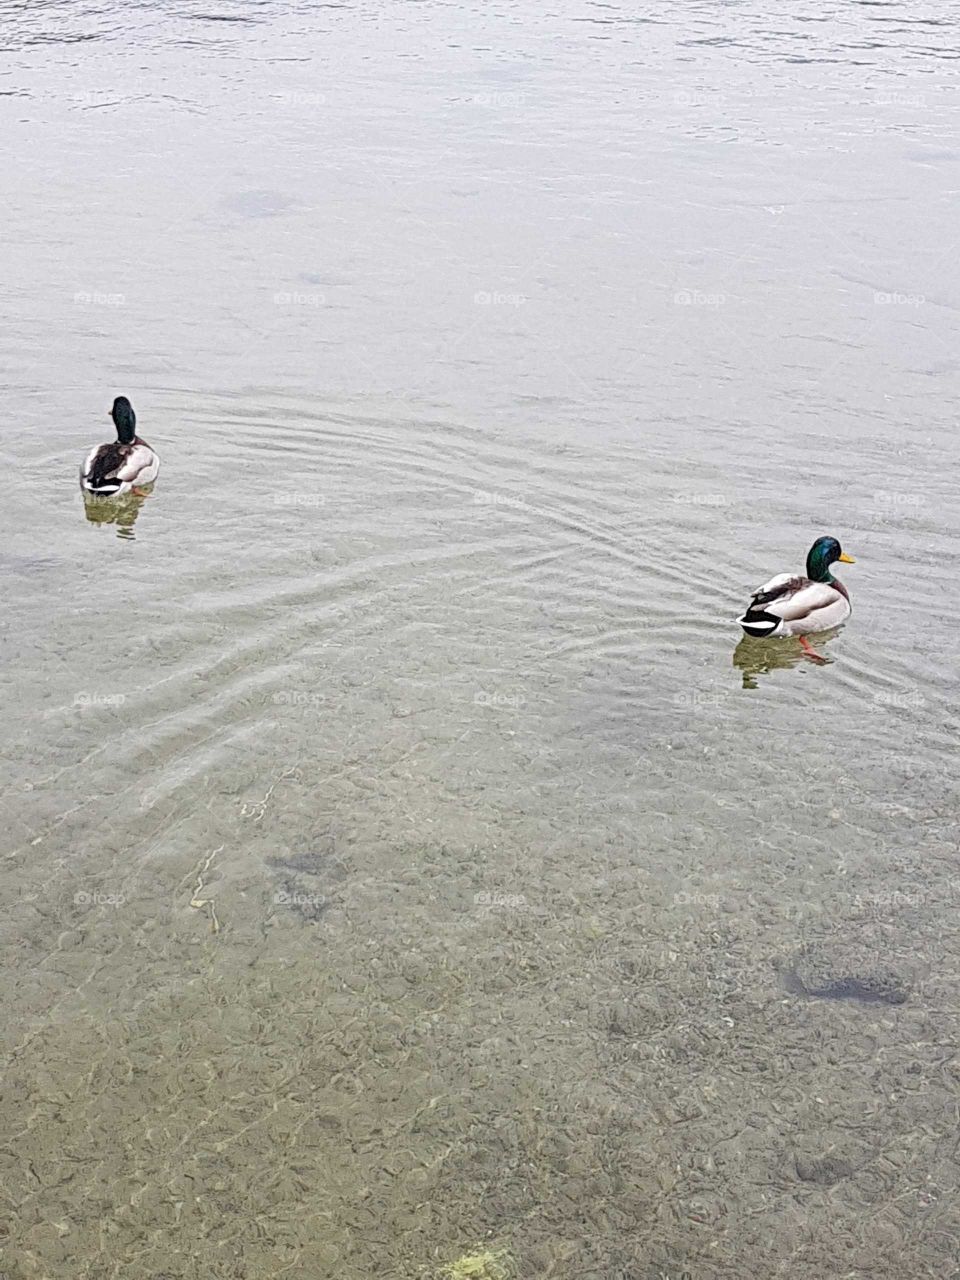 Ducks in the lake